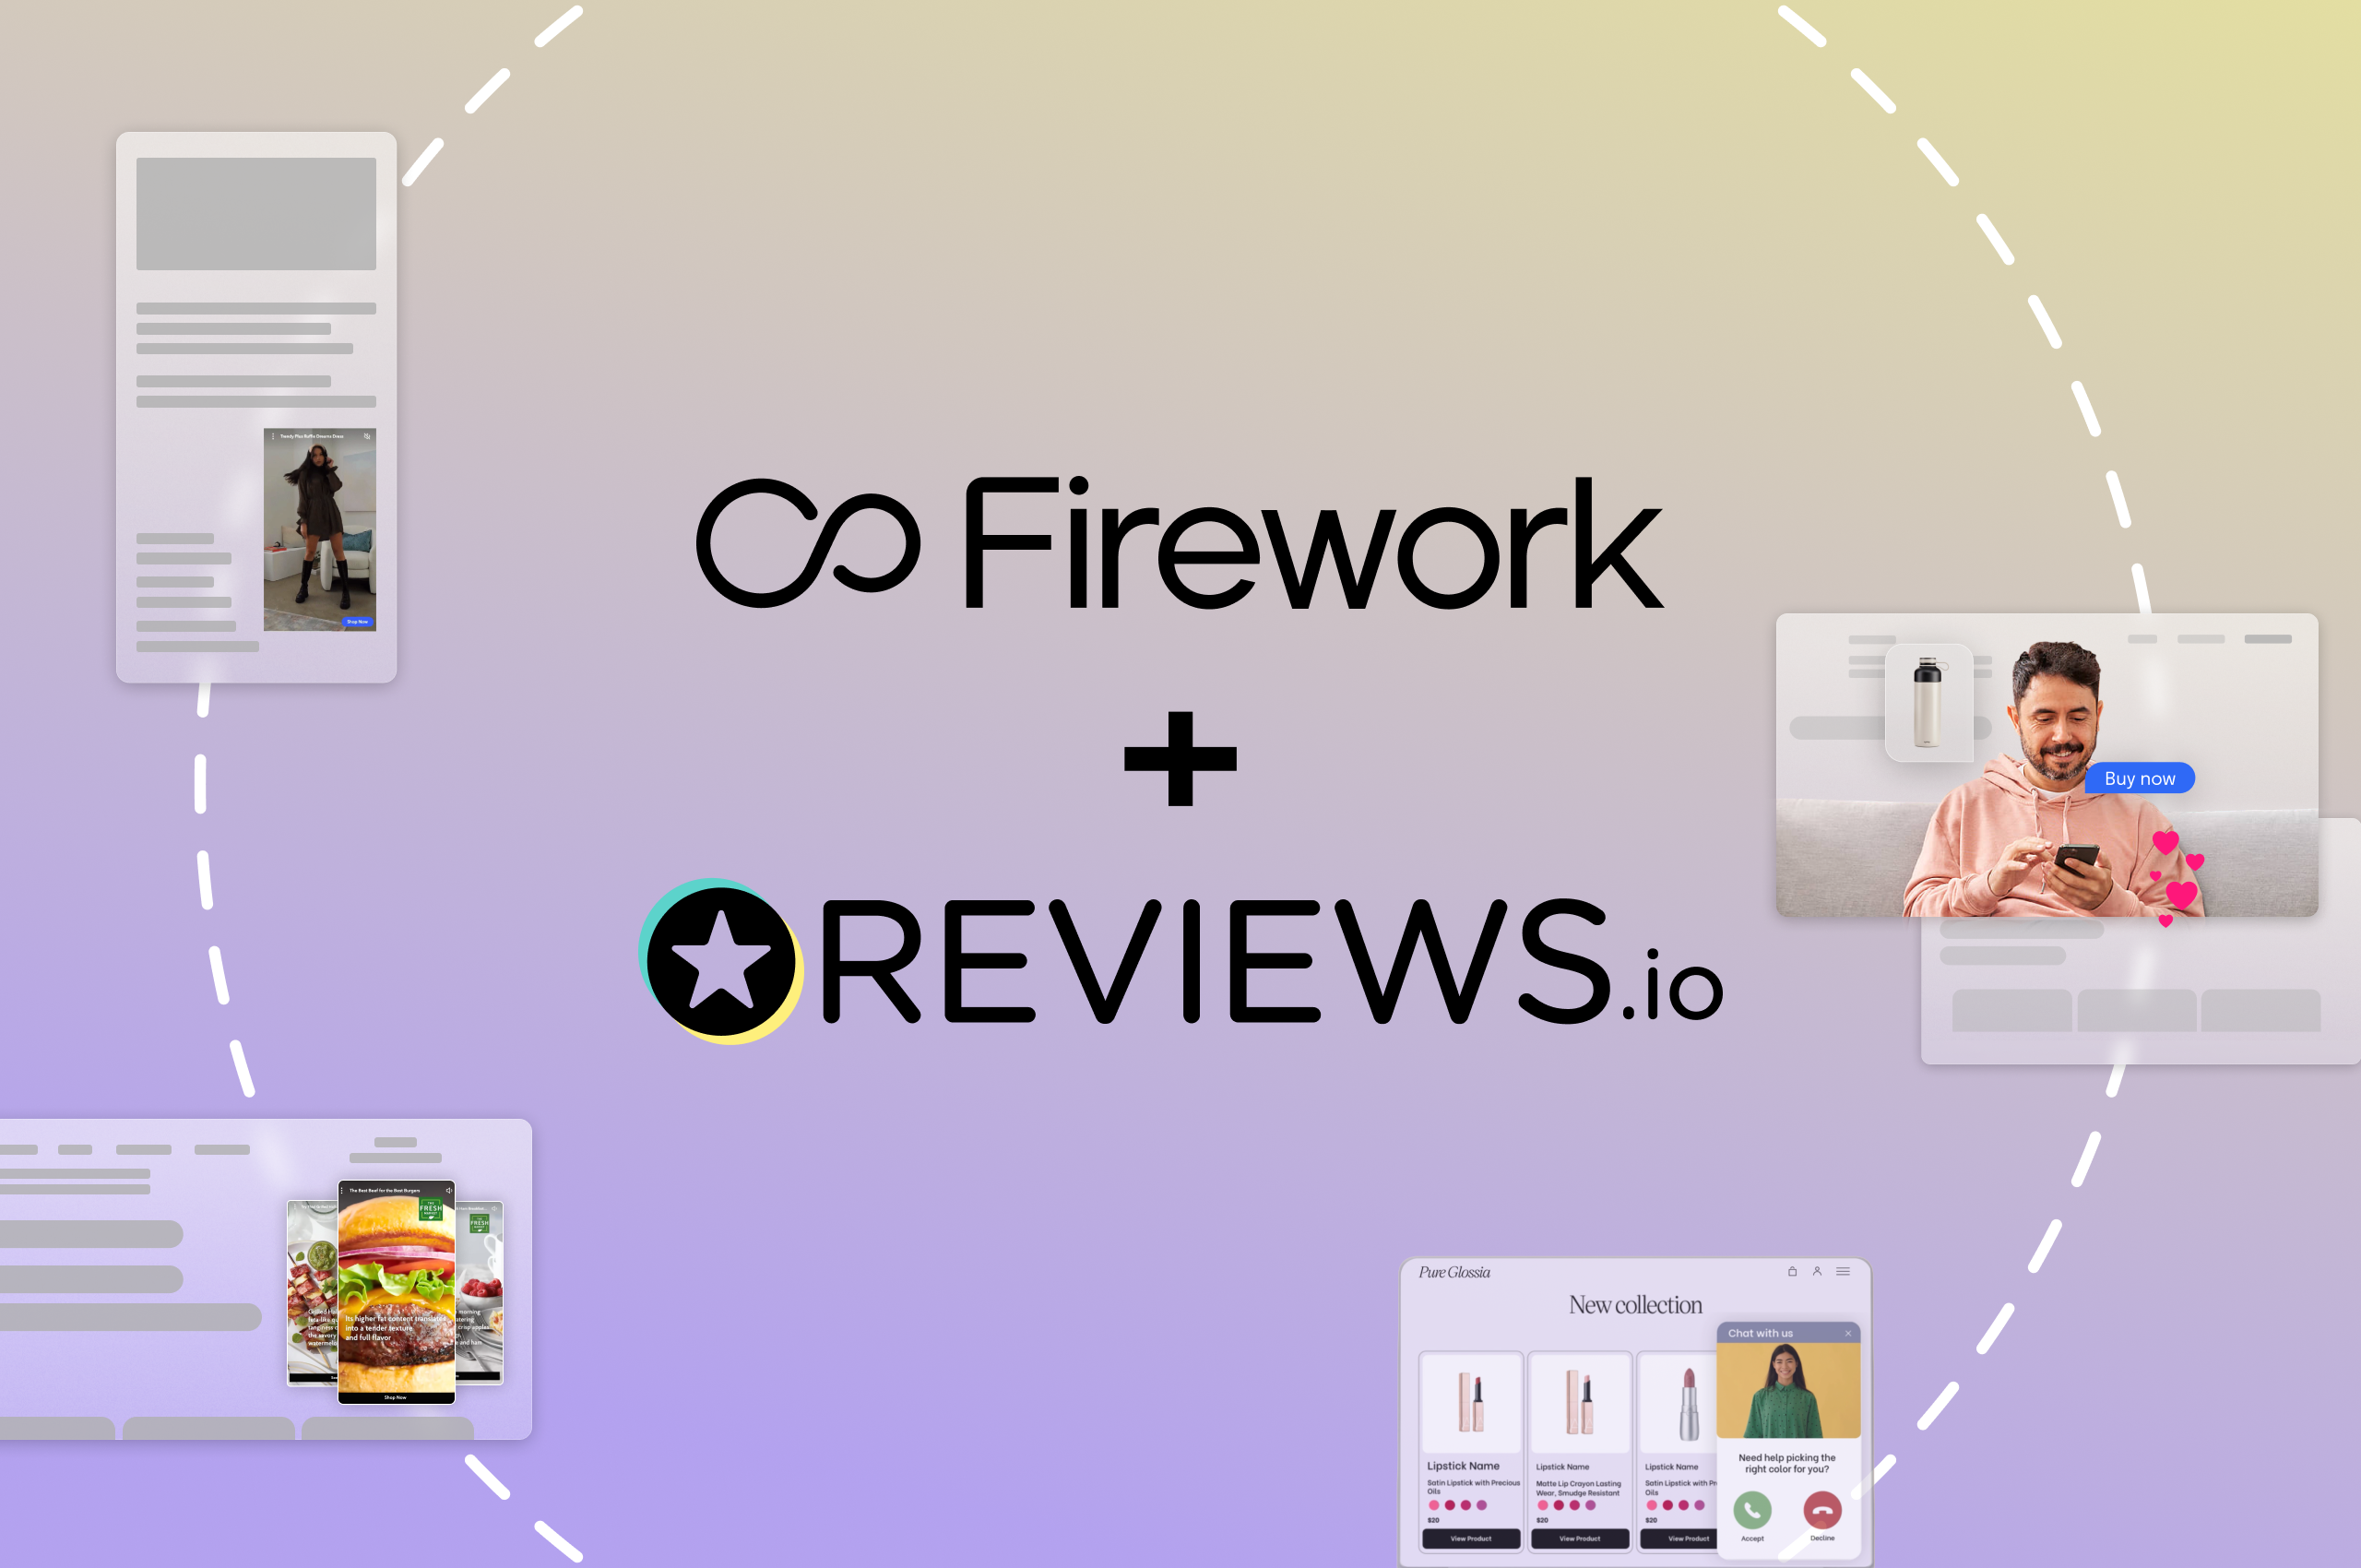 Firework & Reviews.io Team Up to Make Video Reviews Shoppable